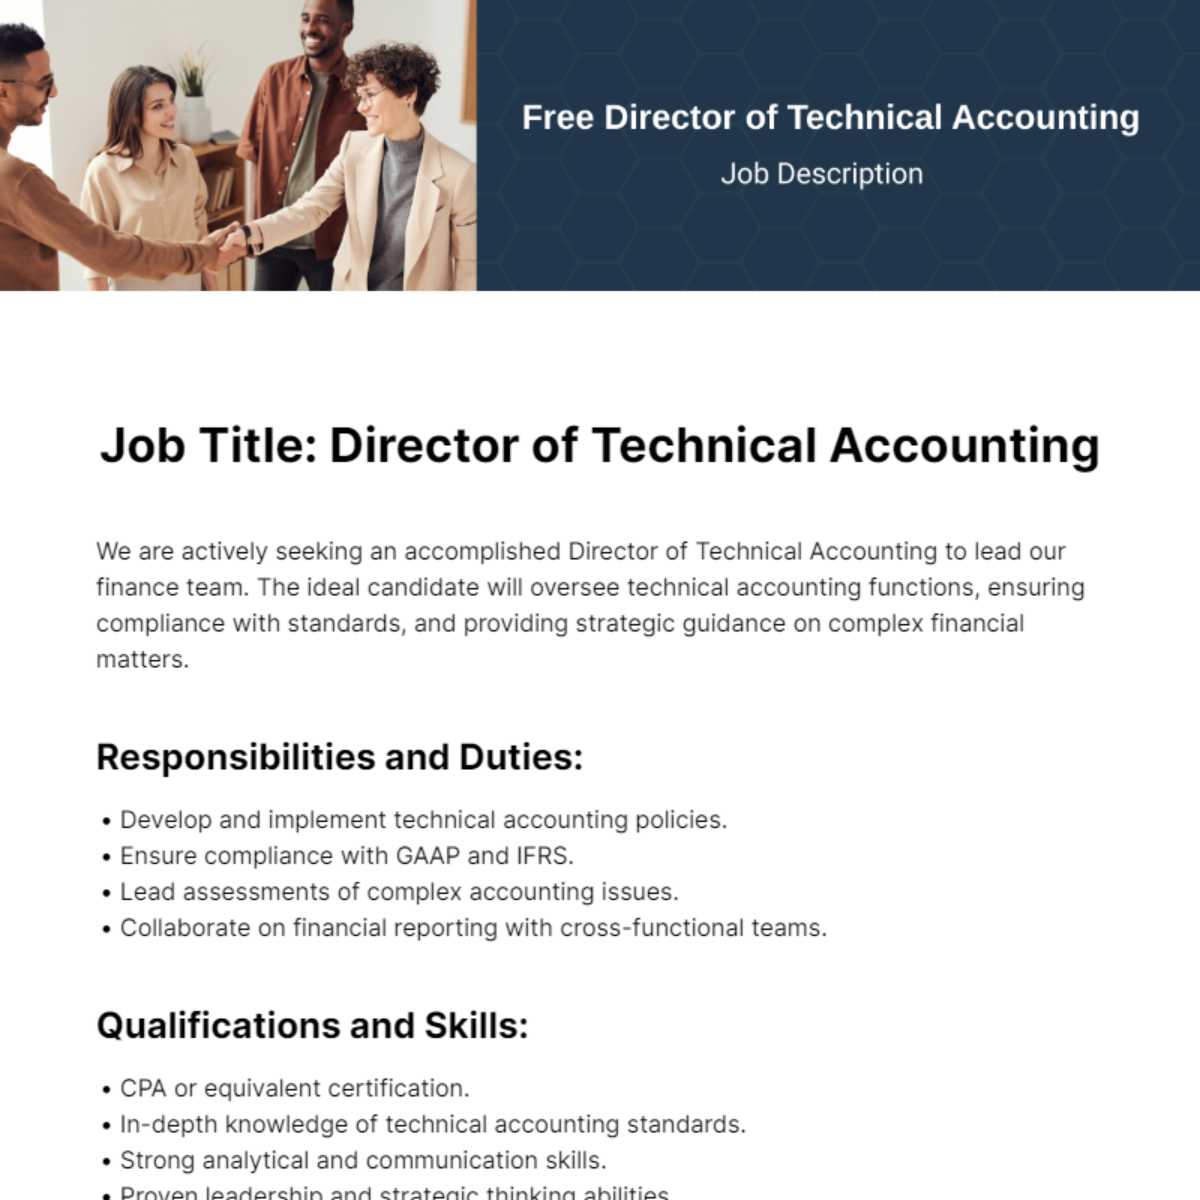 Director of Technical Accounting Job Description Template